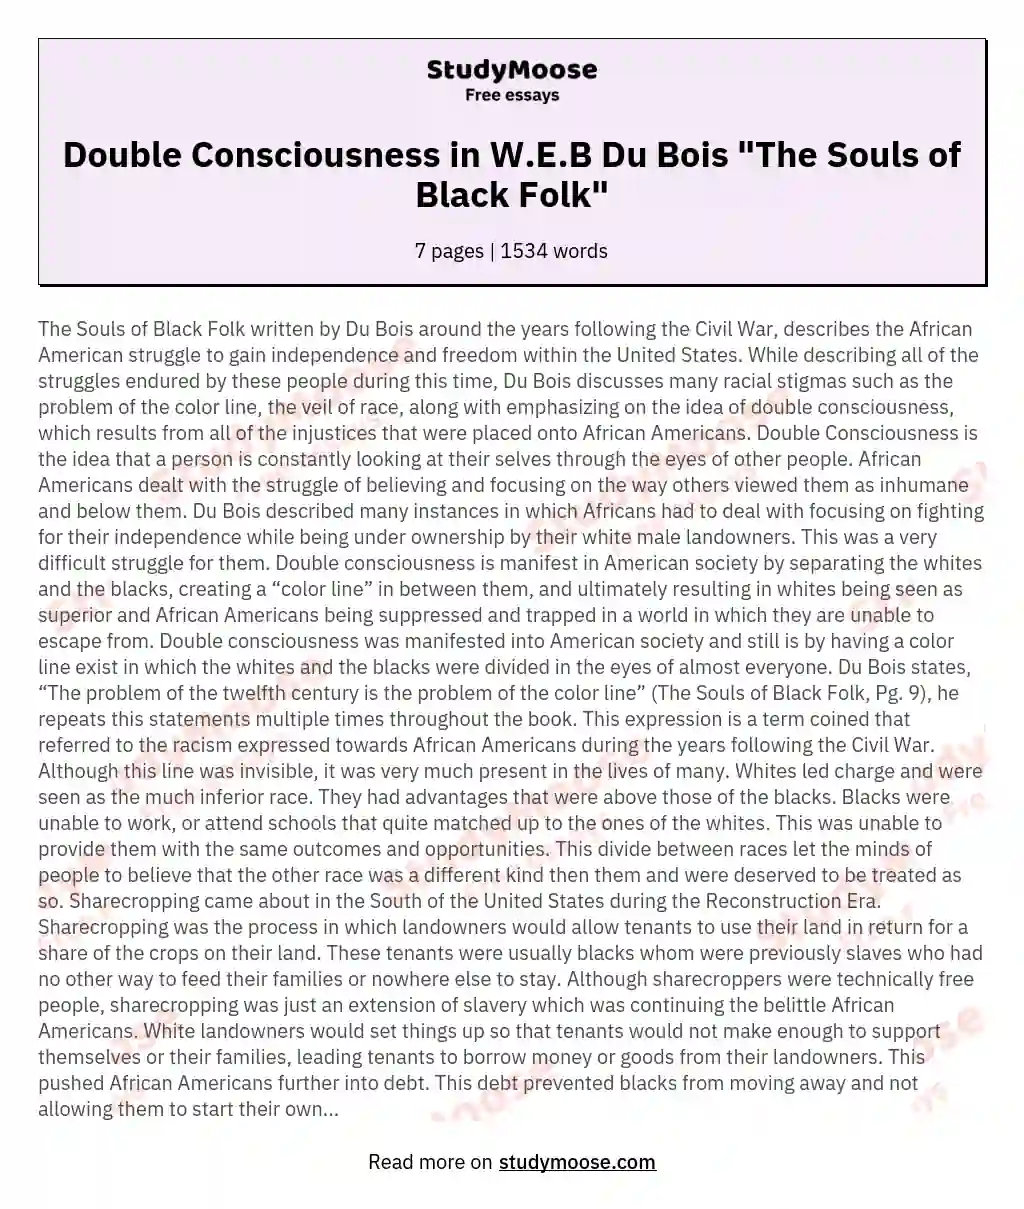 Double Consciousness in W.E.B Du Bois "The Souls of Black Folk"